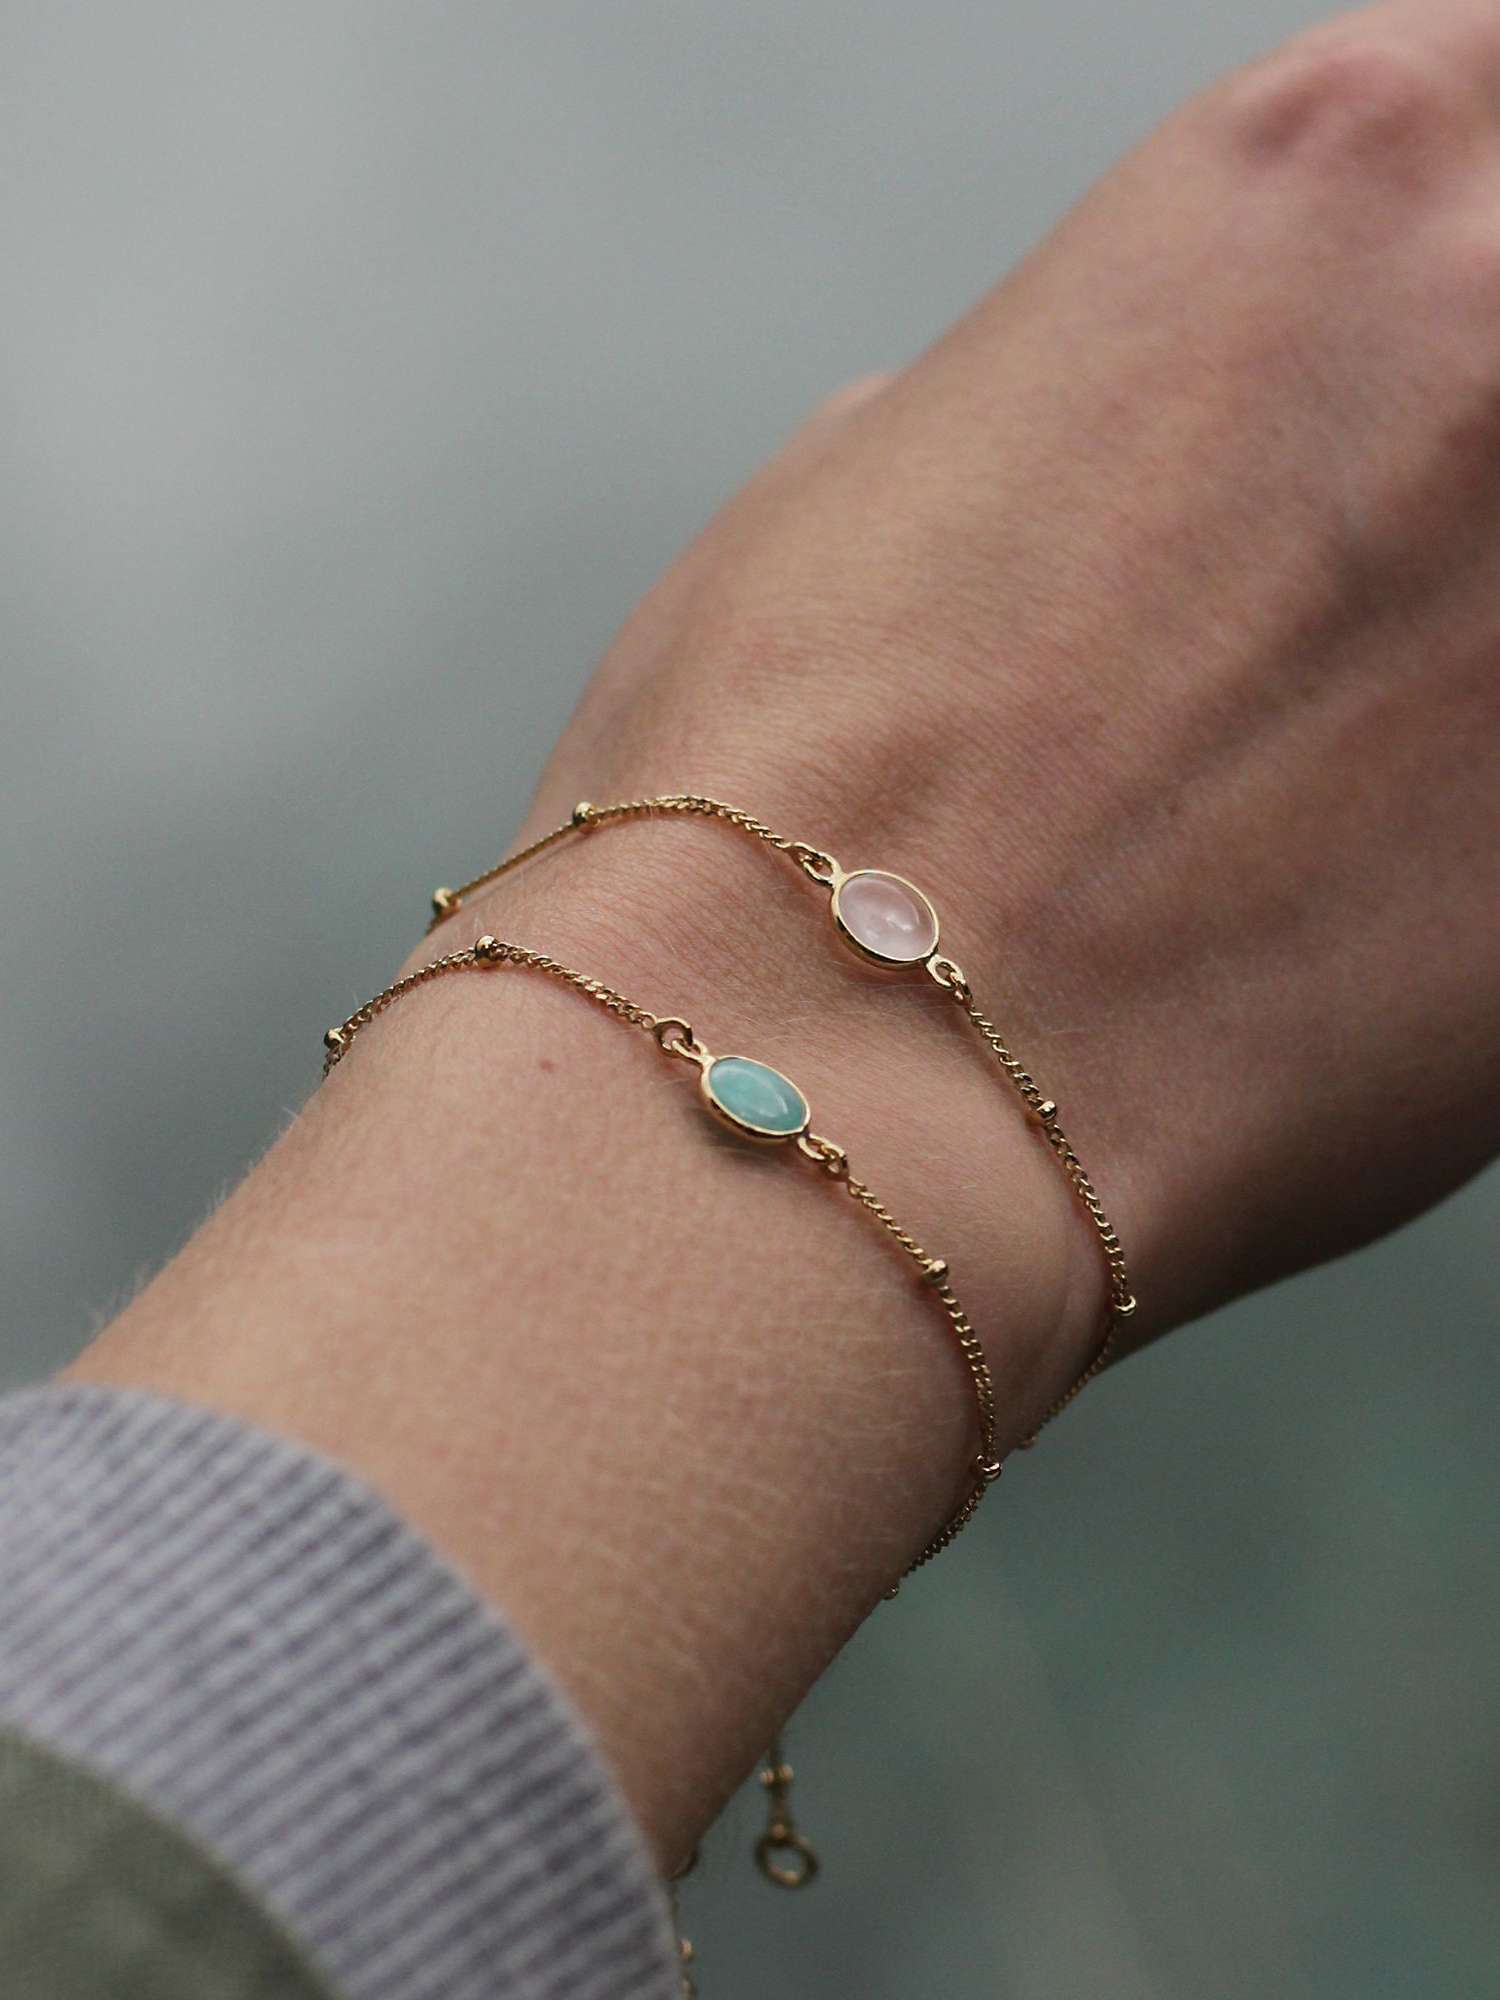 Buy Daisy London Round Semi-Precious Healing Stone Bead Chain Bracelet, Amazonite Online at johnlewis.com